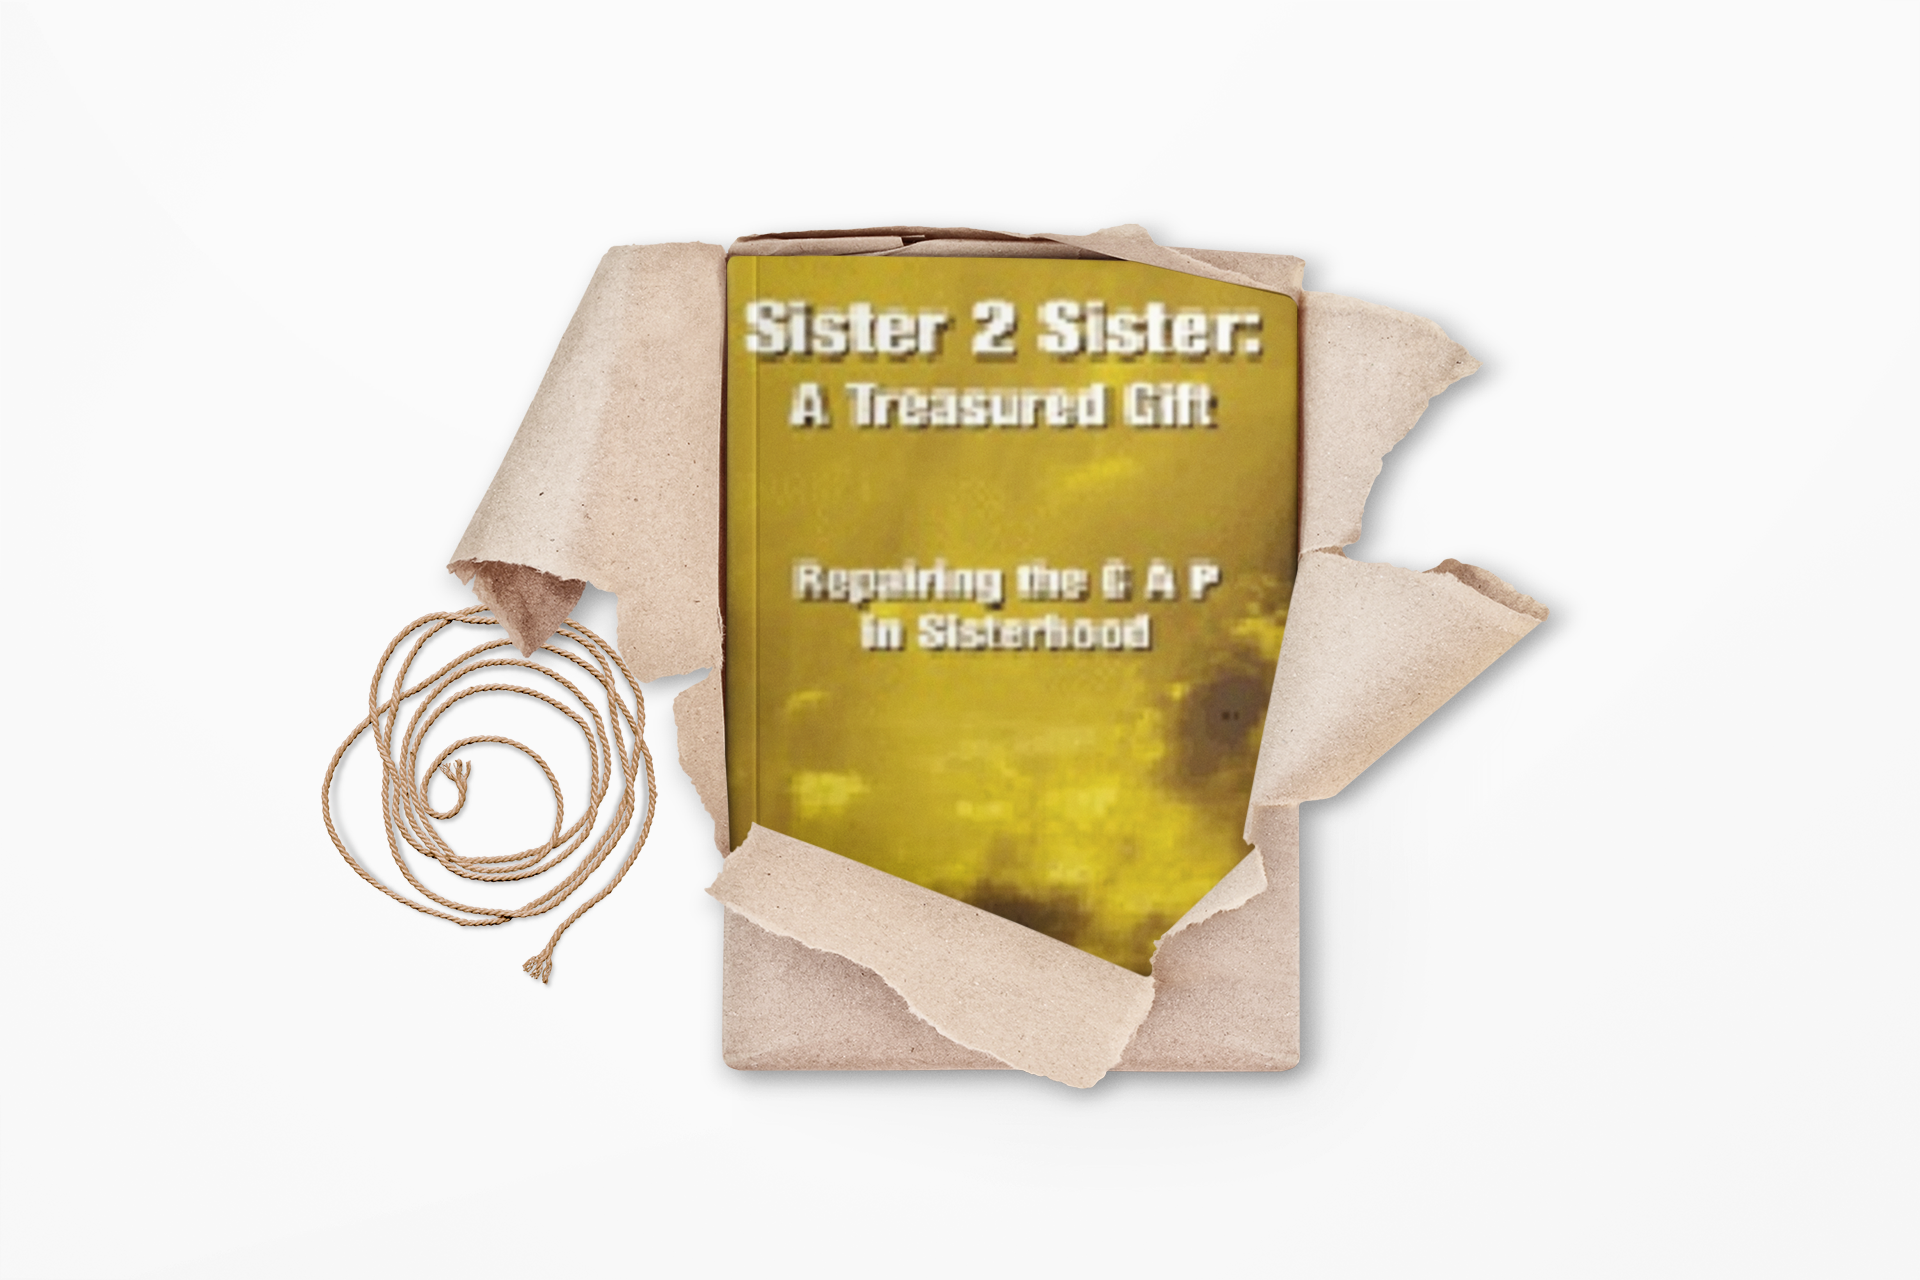 Sister 2 Sister: A Treasured Gift